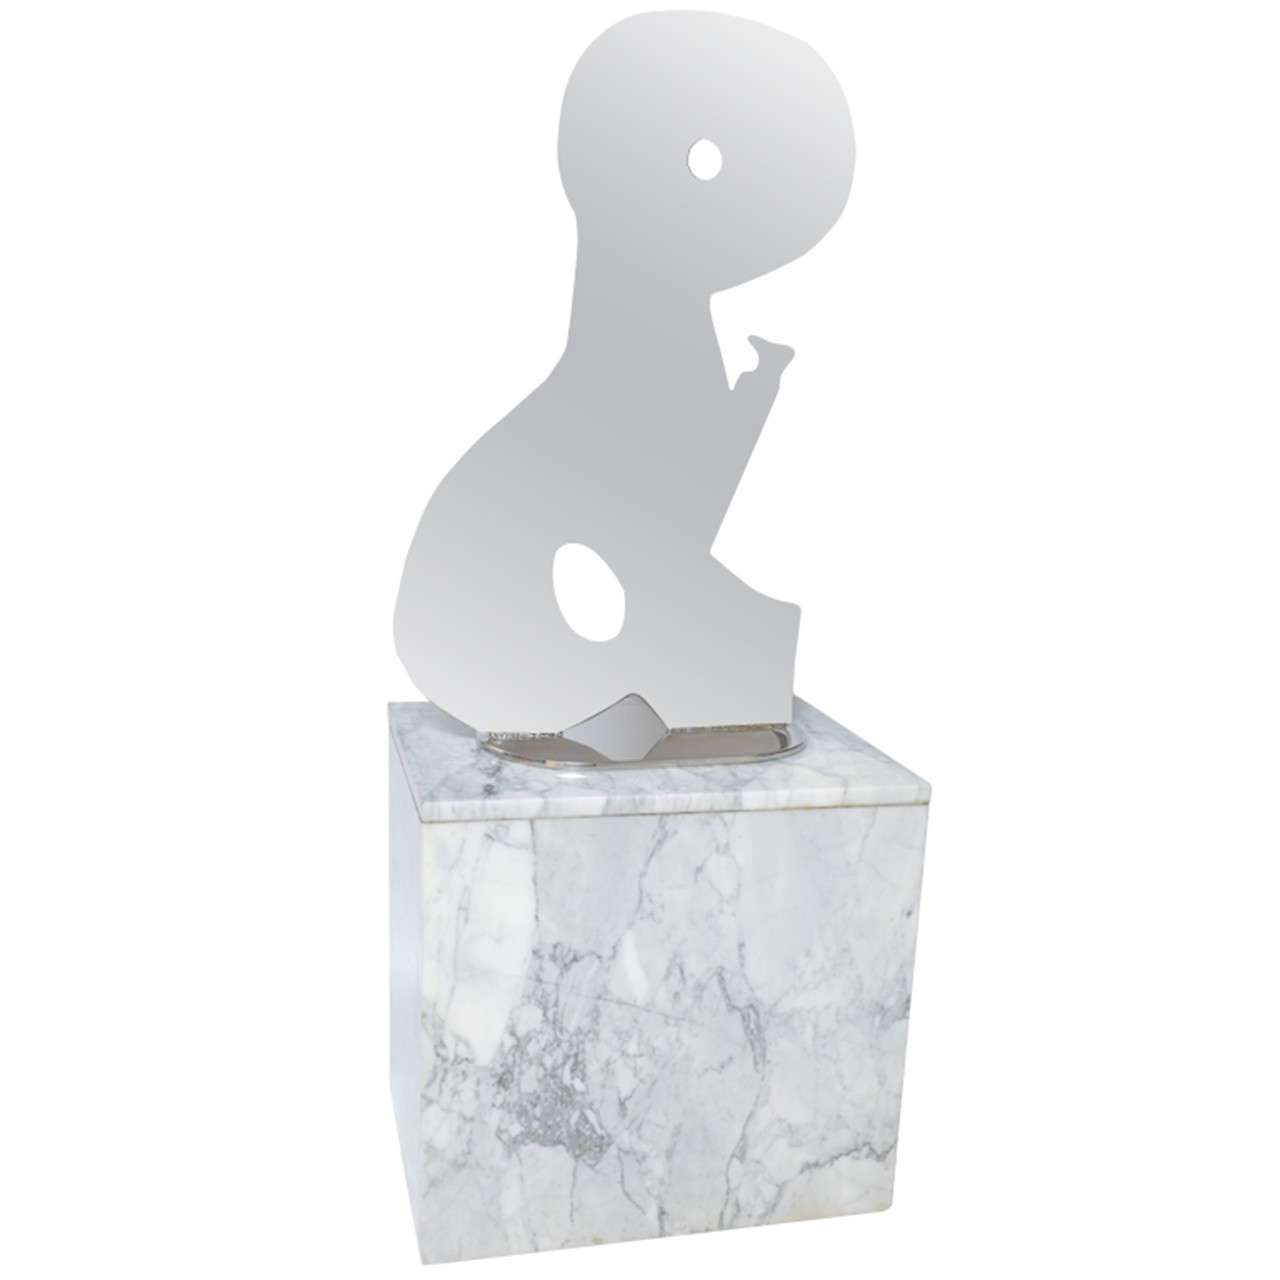 Sculpture en métal sur marbre de Jack Schuyler